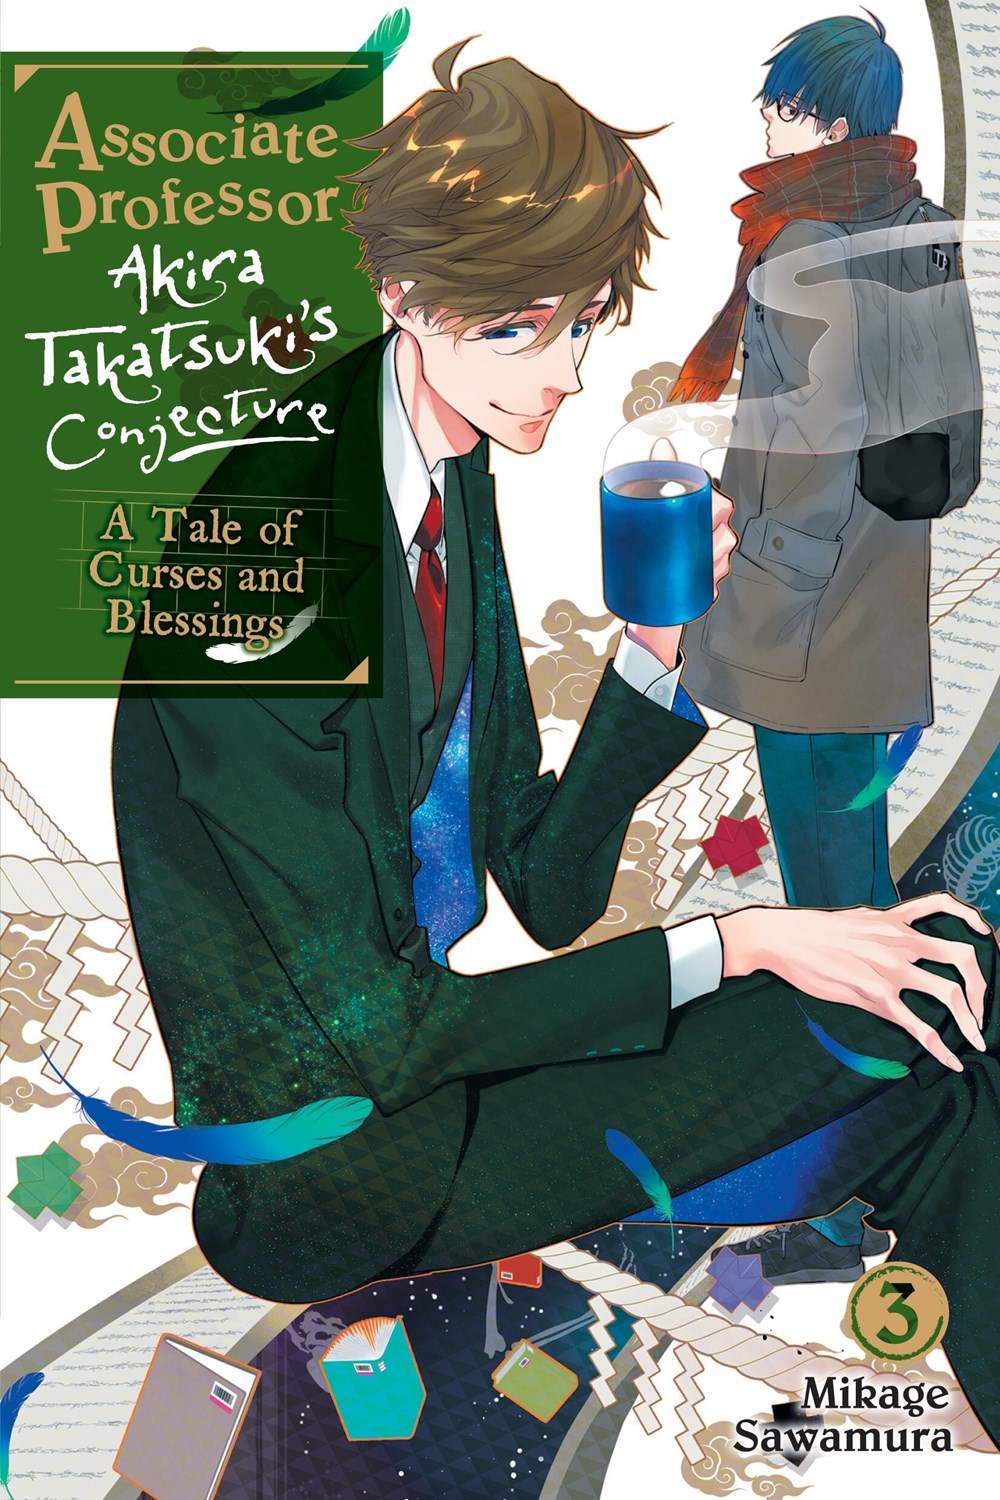 Associate Professor Akira Takatsuki's Conjecture Vol. 03 (Light Novel): A Tale of Curses and Blessings